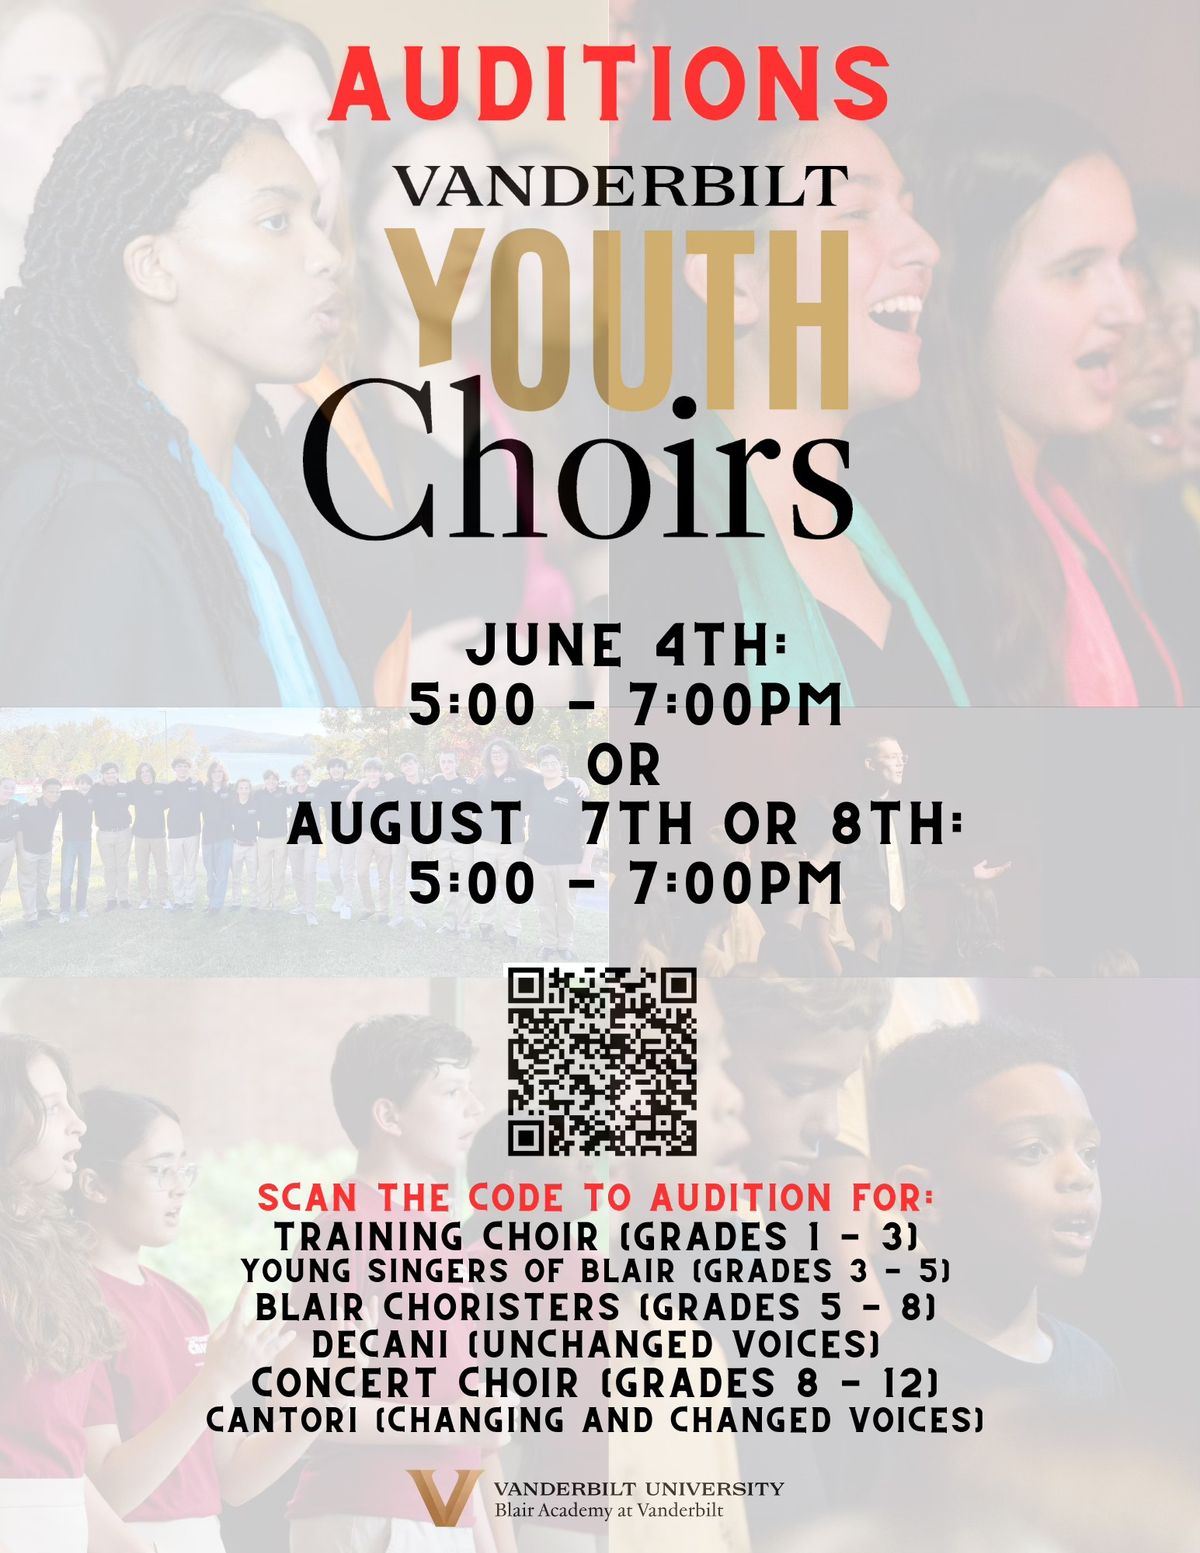 Vanderbilt Youth Choirs Auditions